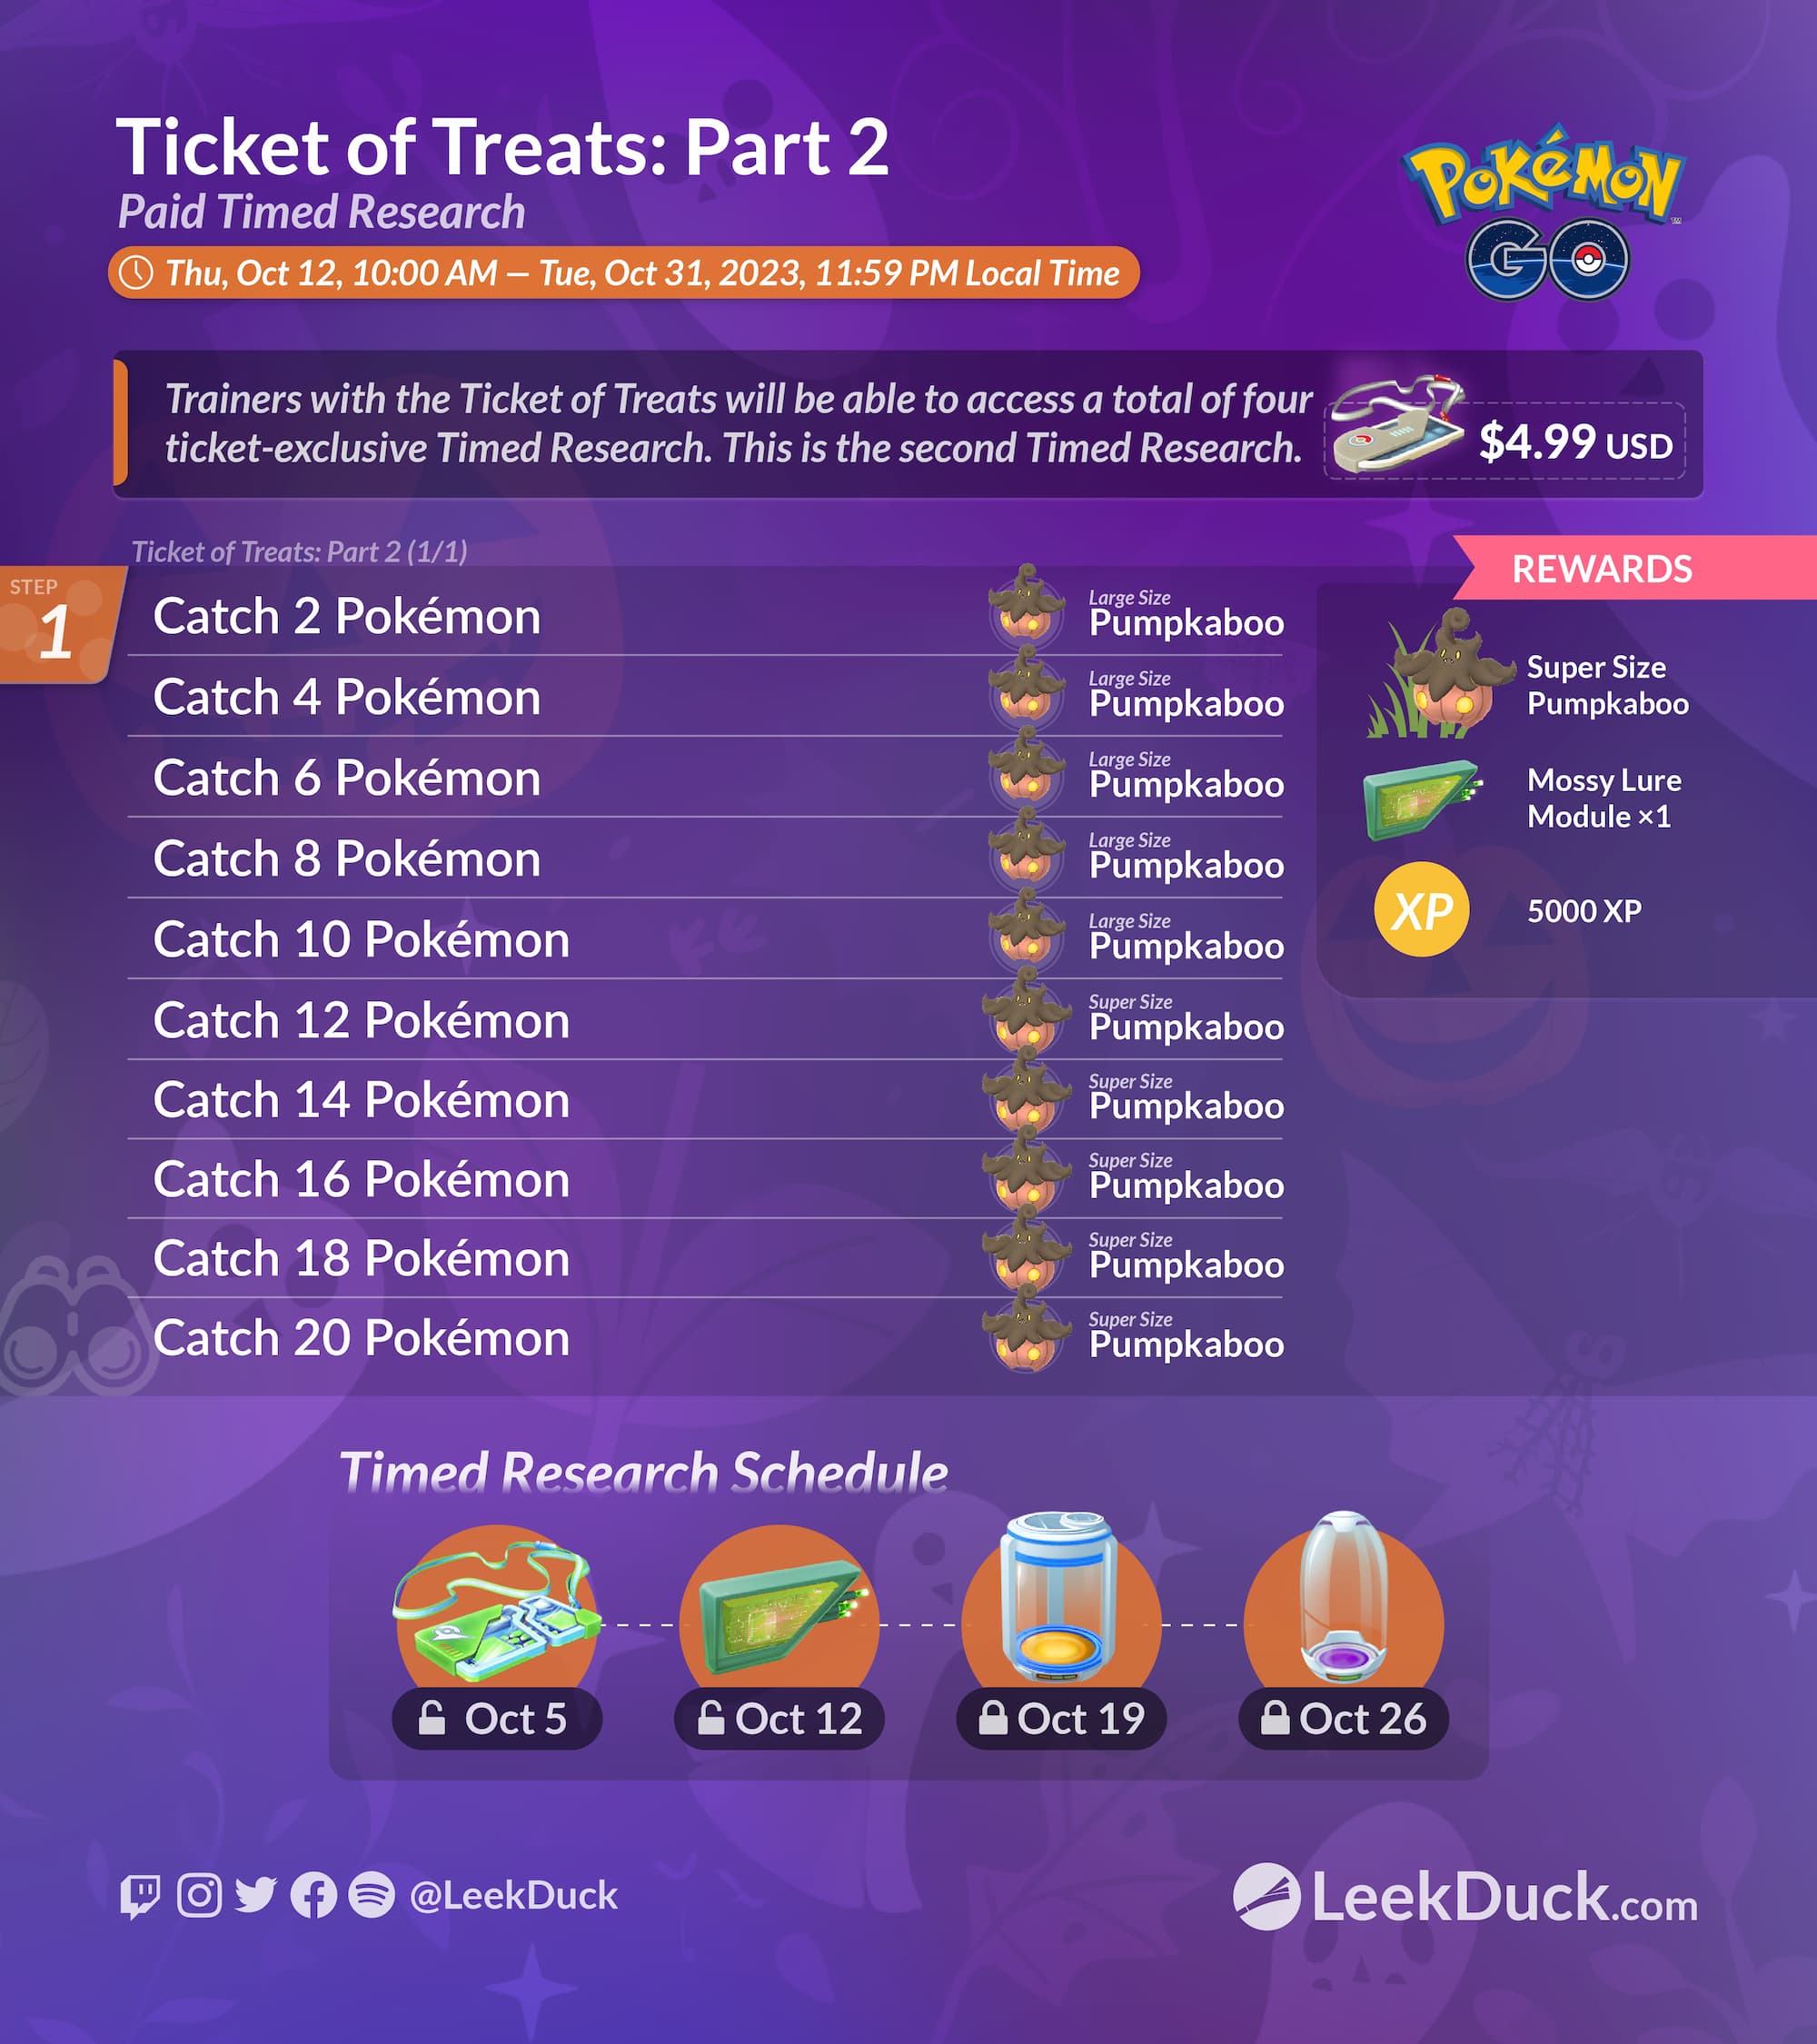 Pokemon Club Tickets, Multiple Dates